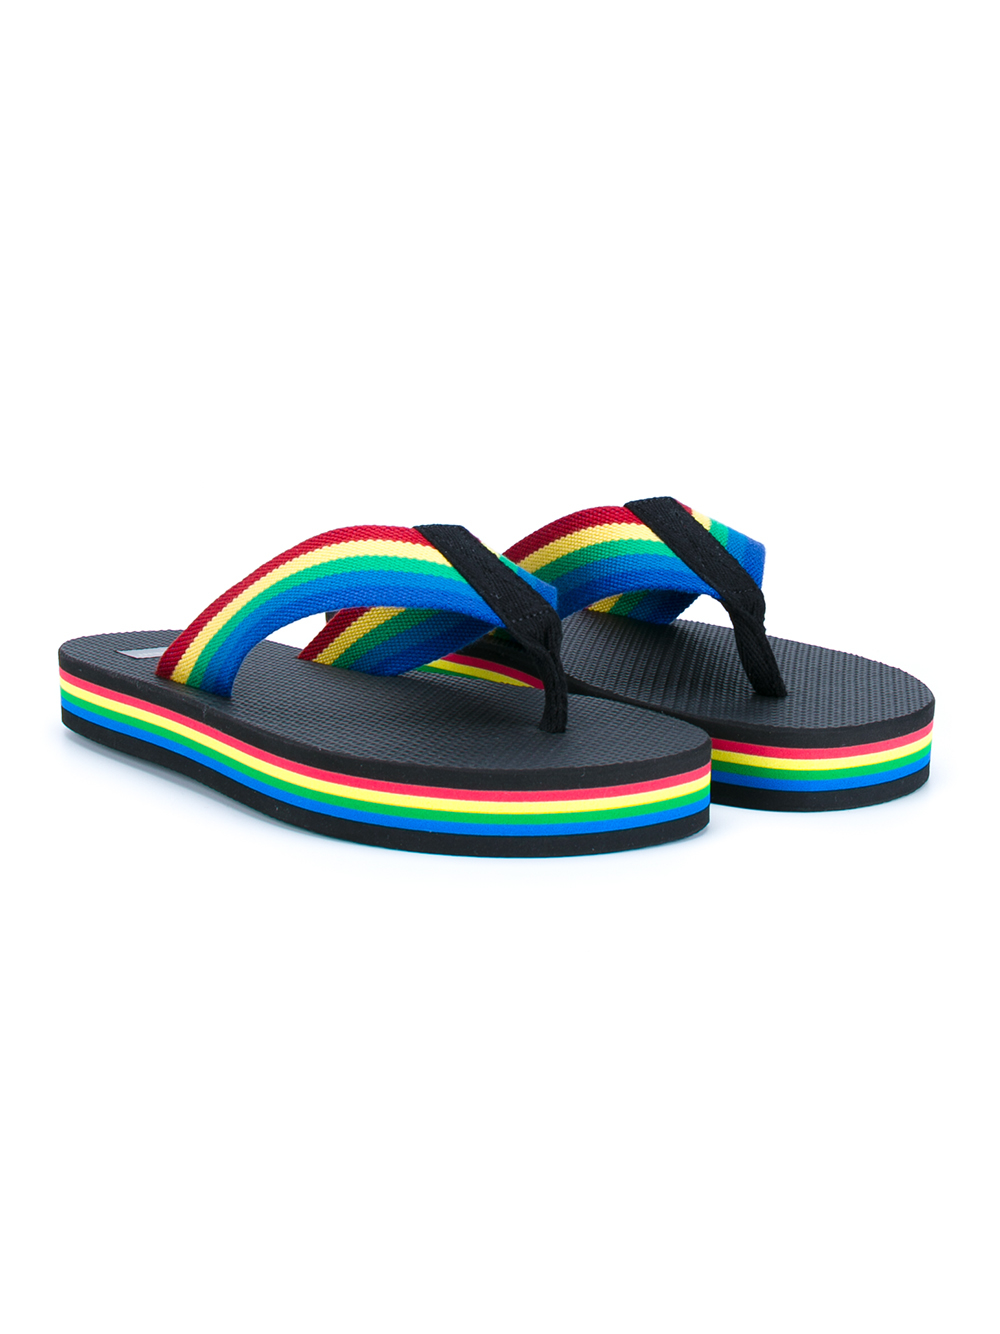 rainbow flip flop